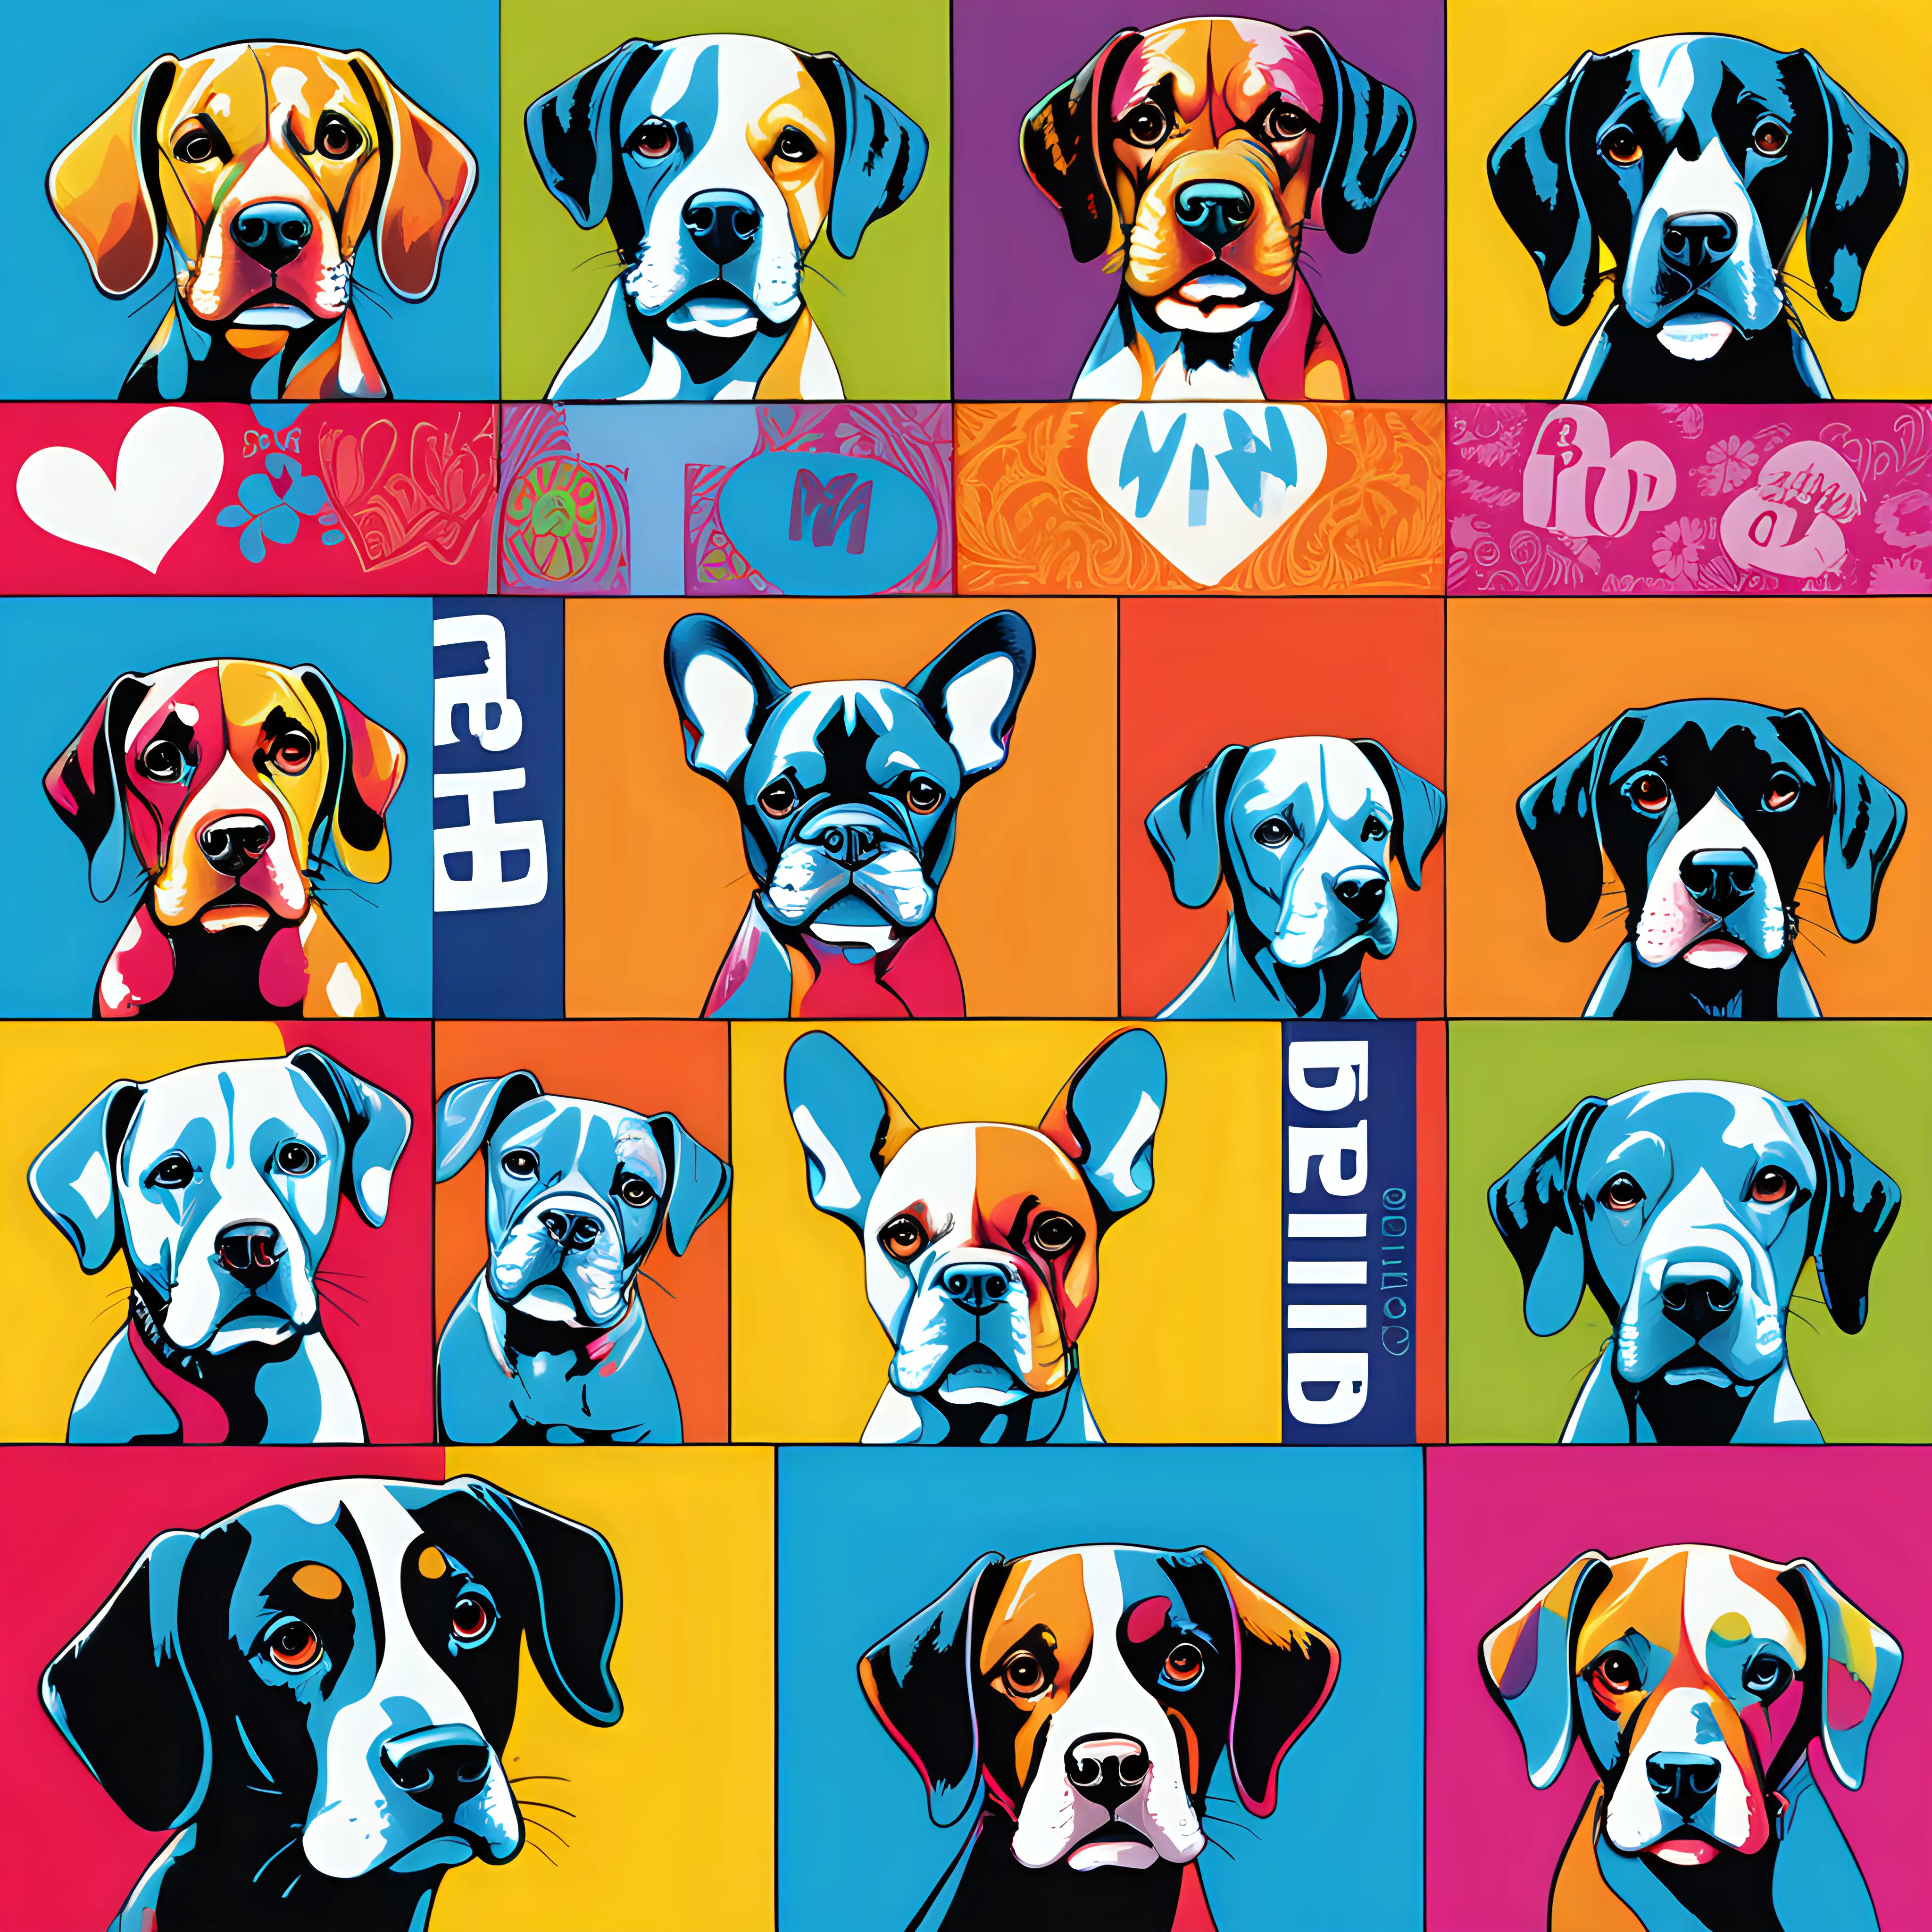 Whimsical Dog Breeds Pop Art Inspired by Beatles Album Cover